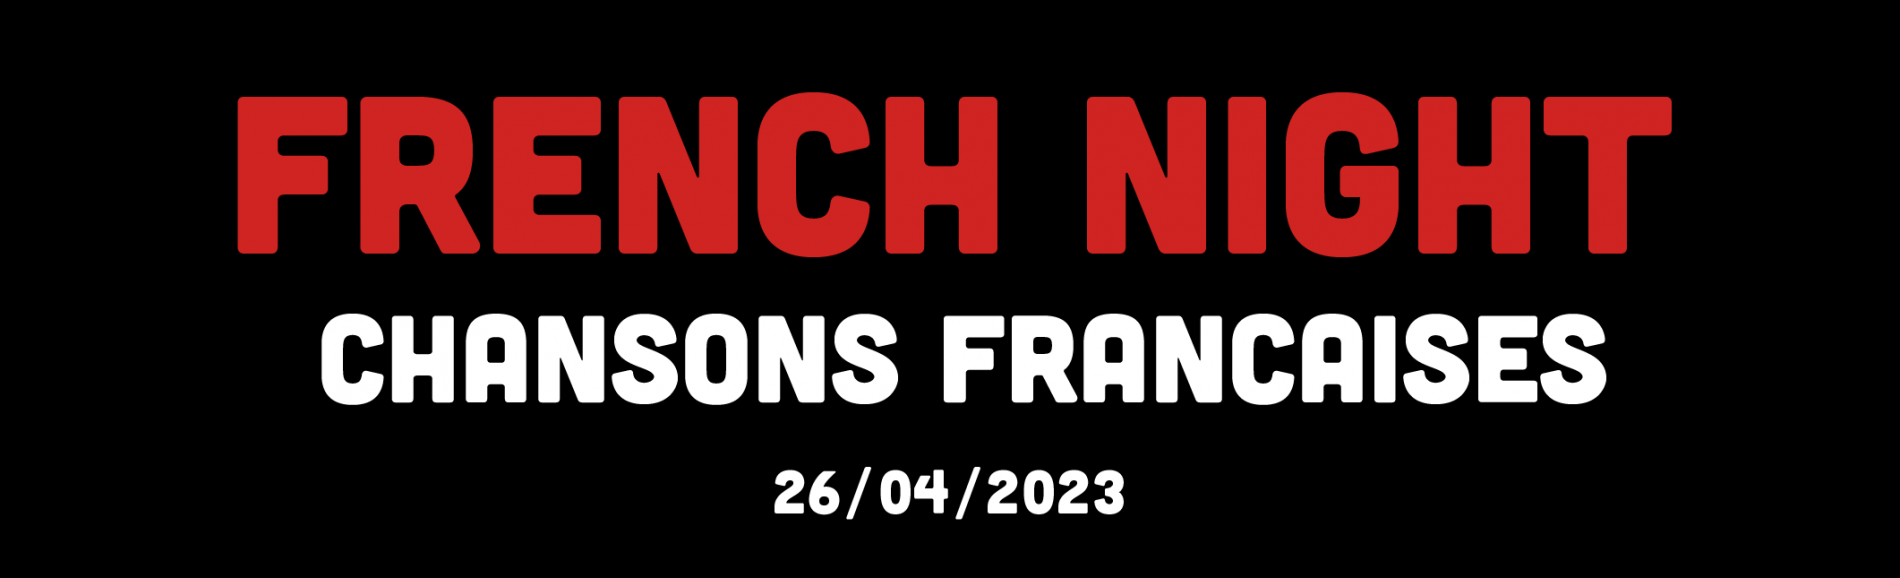 FRENCH NIGHT 26/04/2023